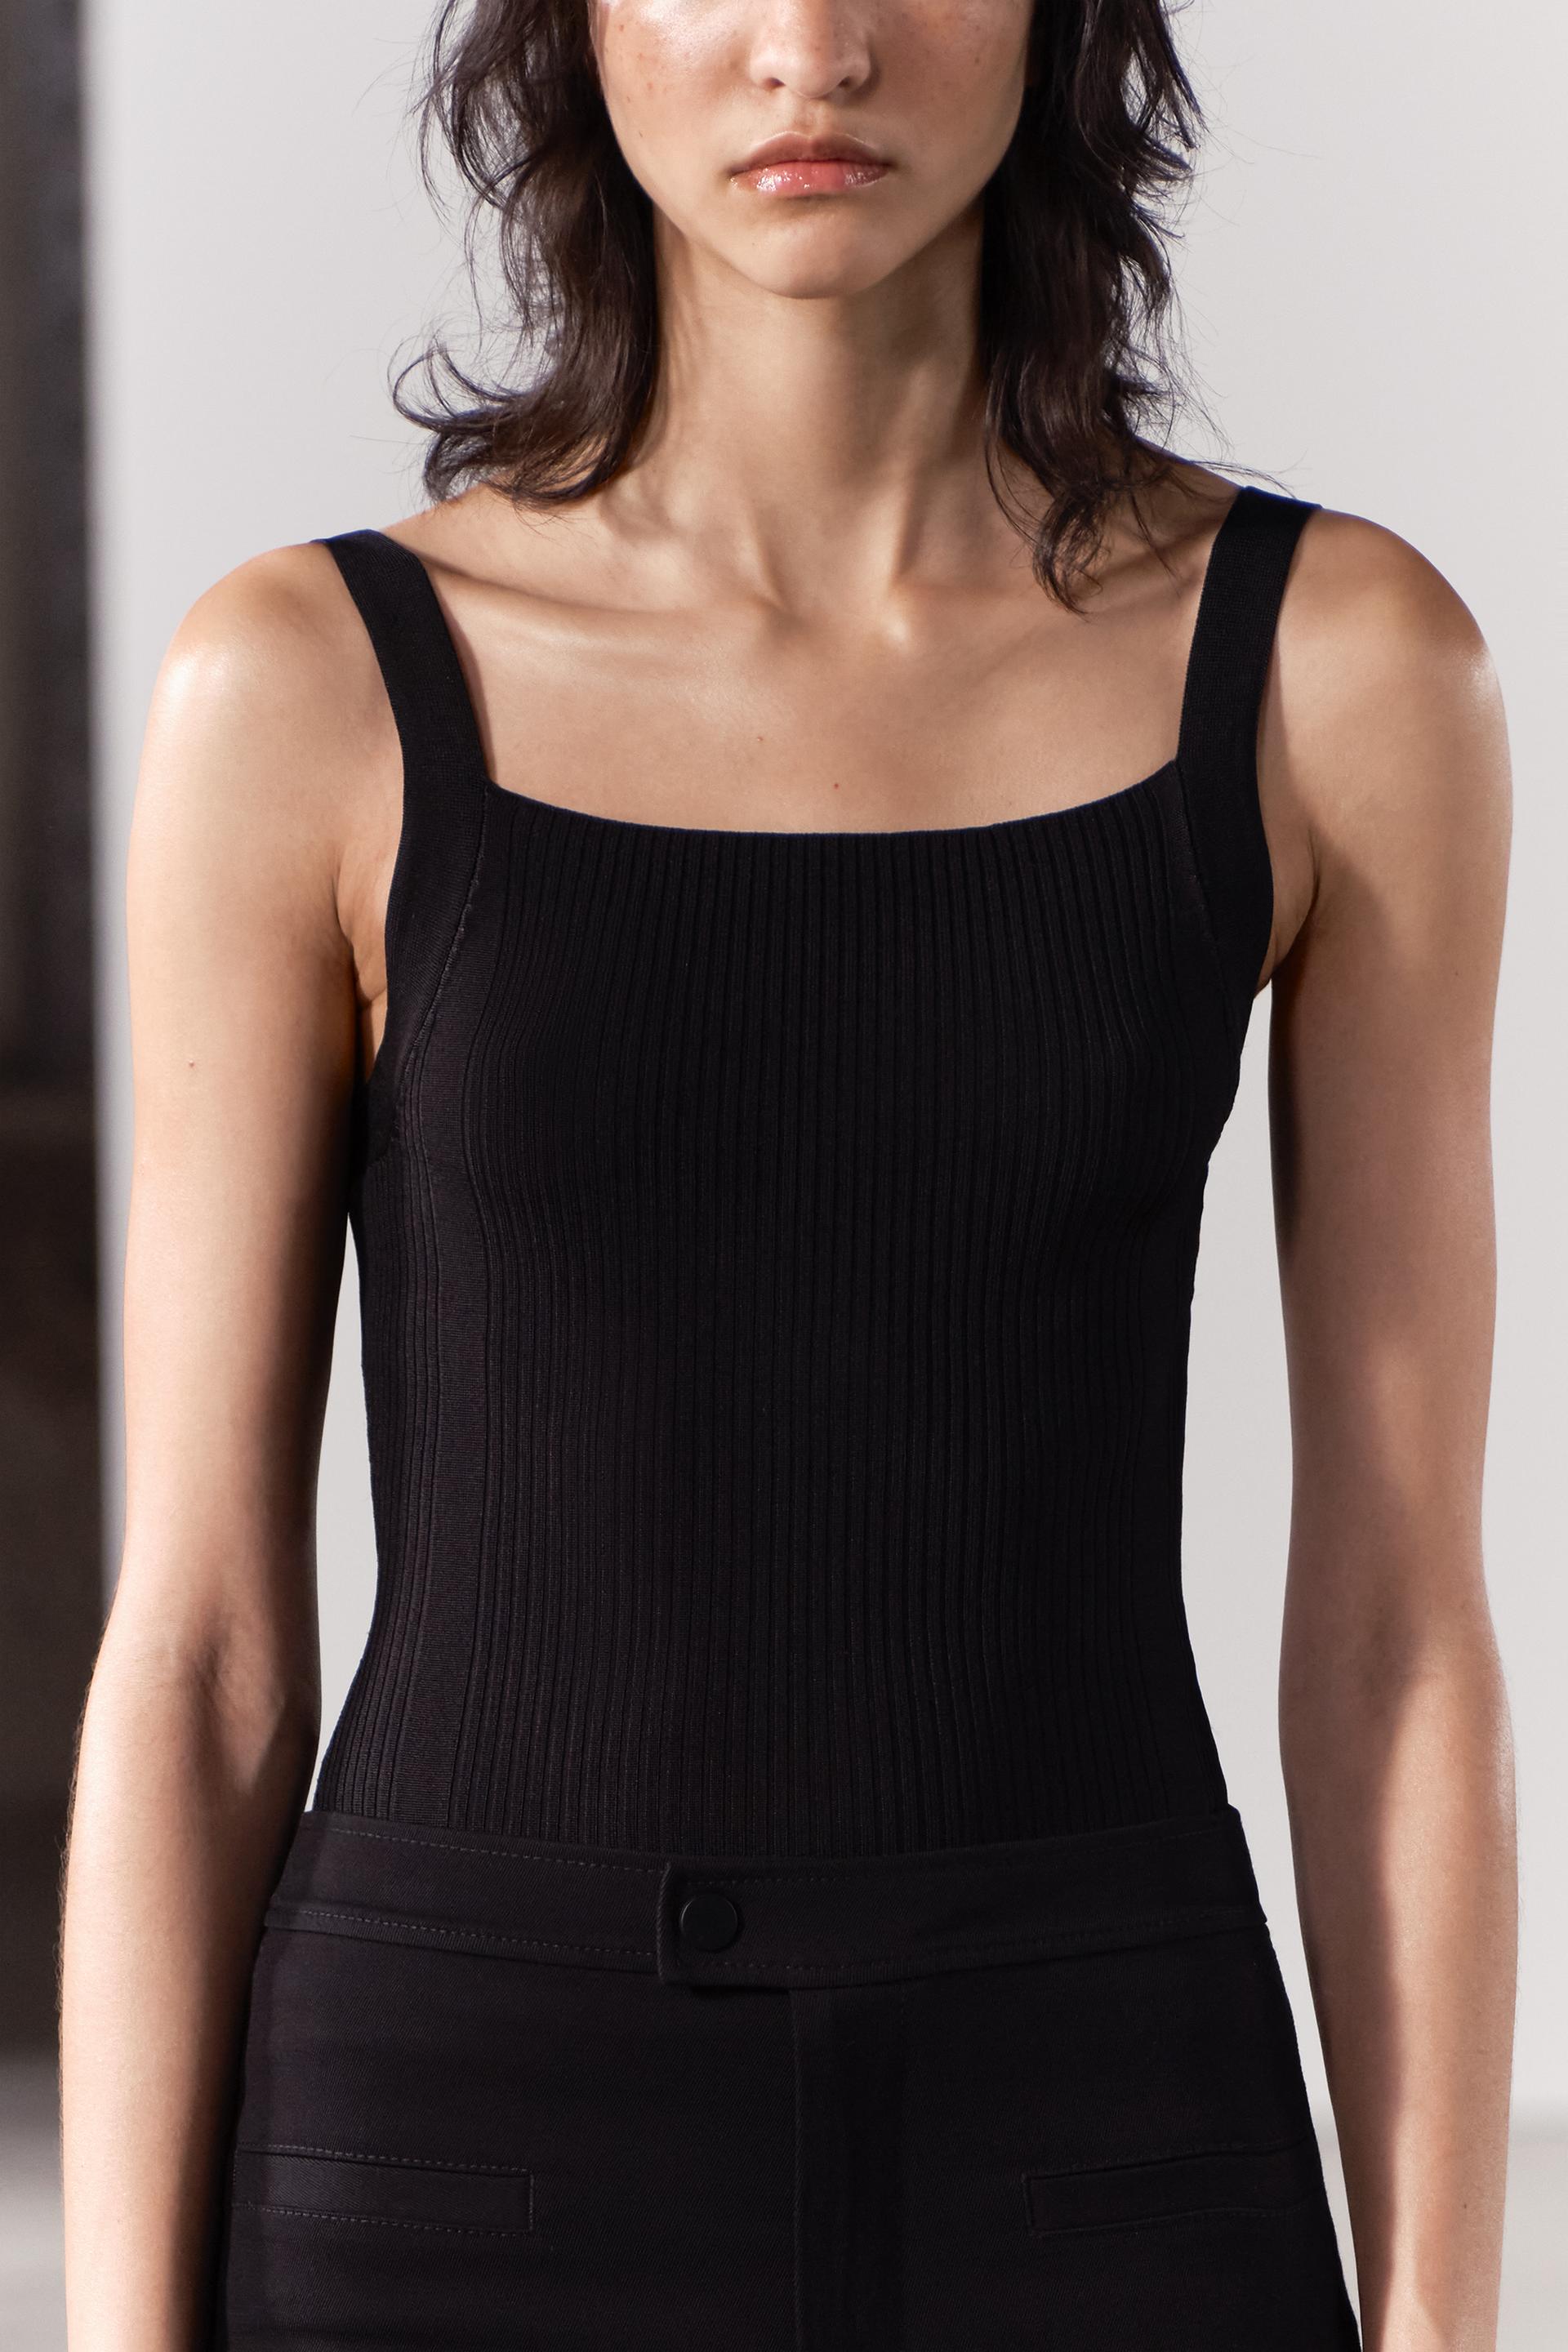 Zara Size M Strappy Ribbed Knit V-Neck Cropped Tank Top Sleeveless Black